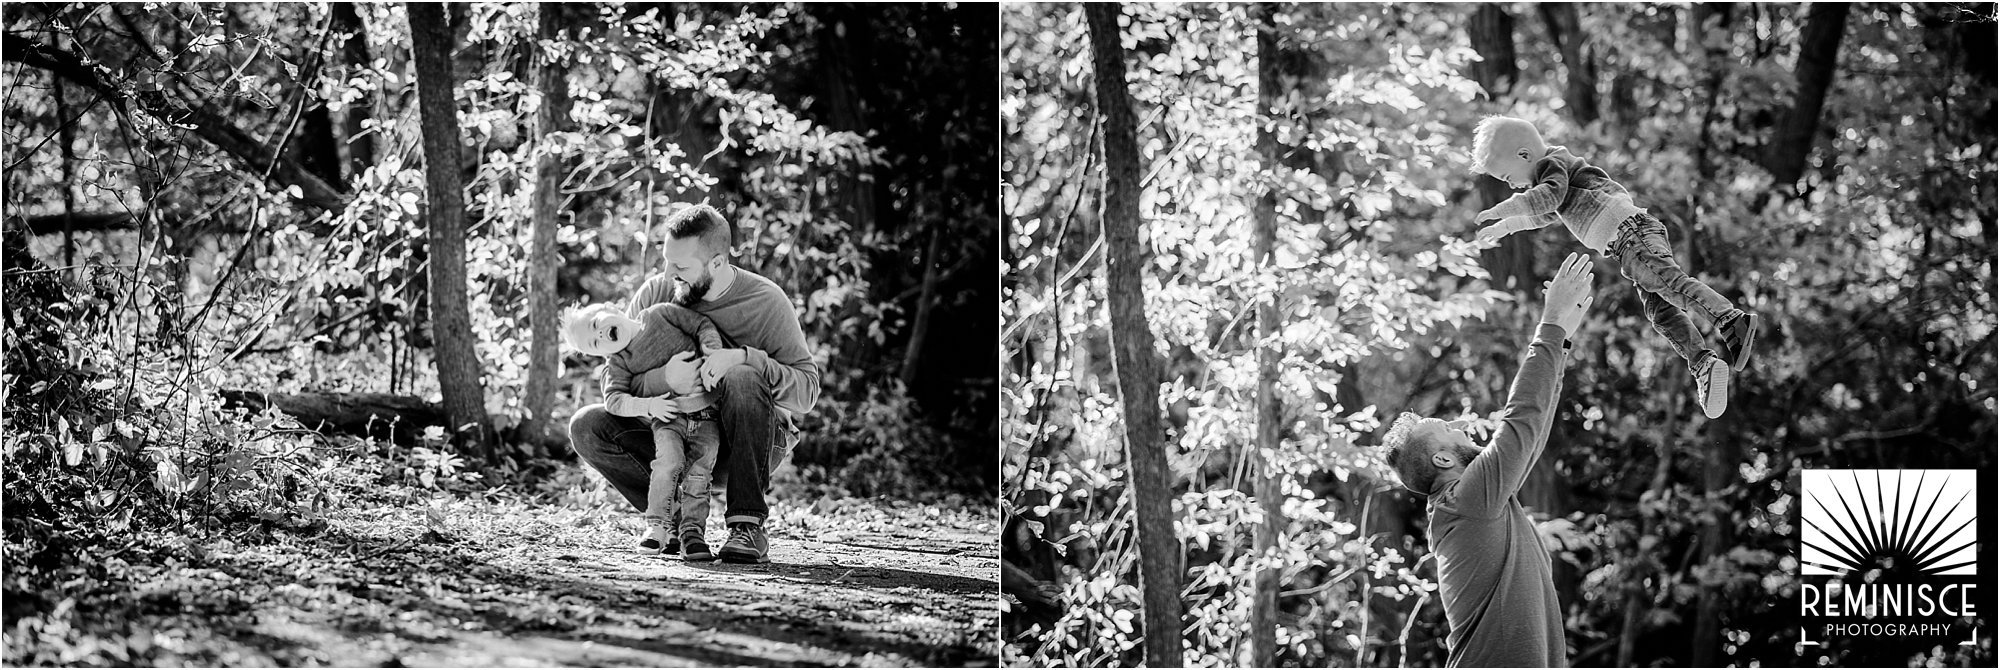 08-third-birthday-portraits-fall-photos-schlitz-audubon-nature-center-father-son-playing-tossing-air.jpg